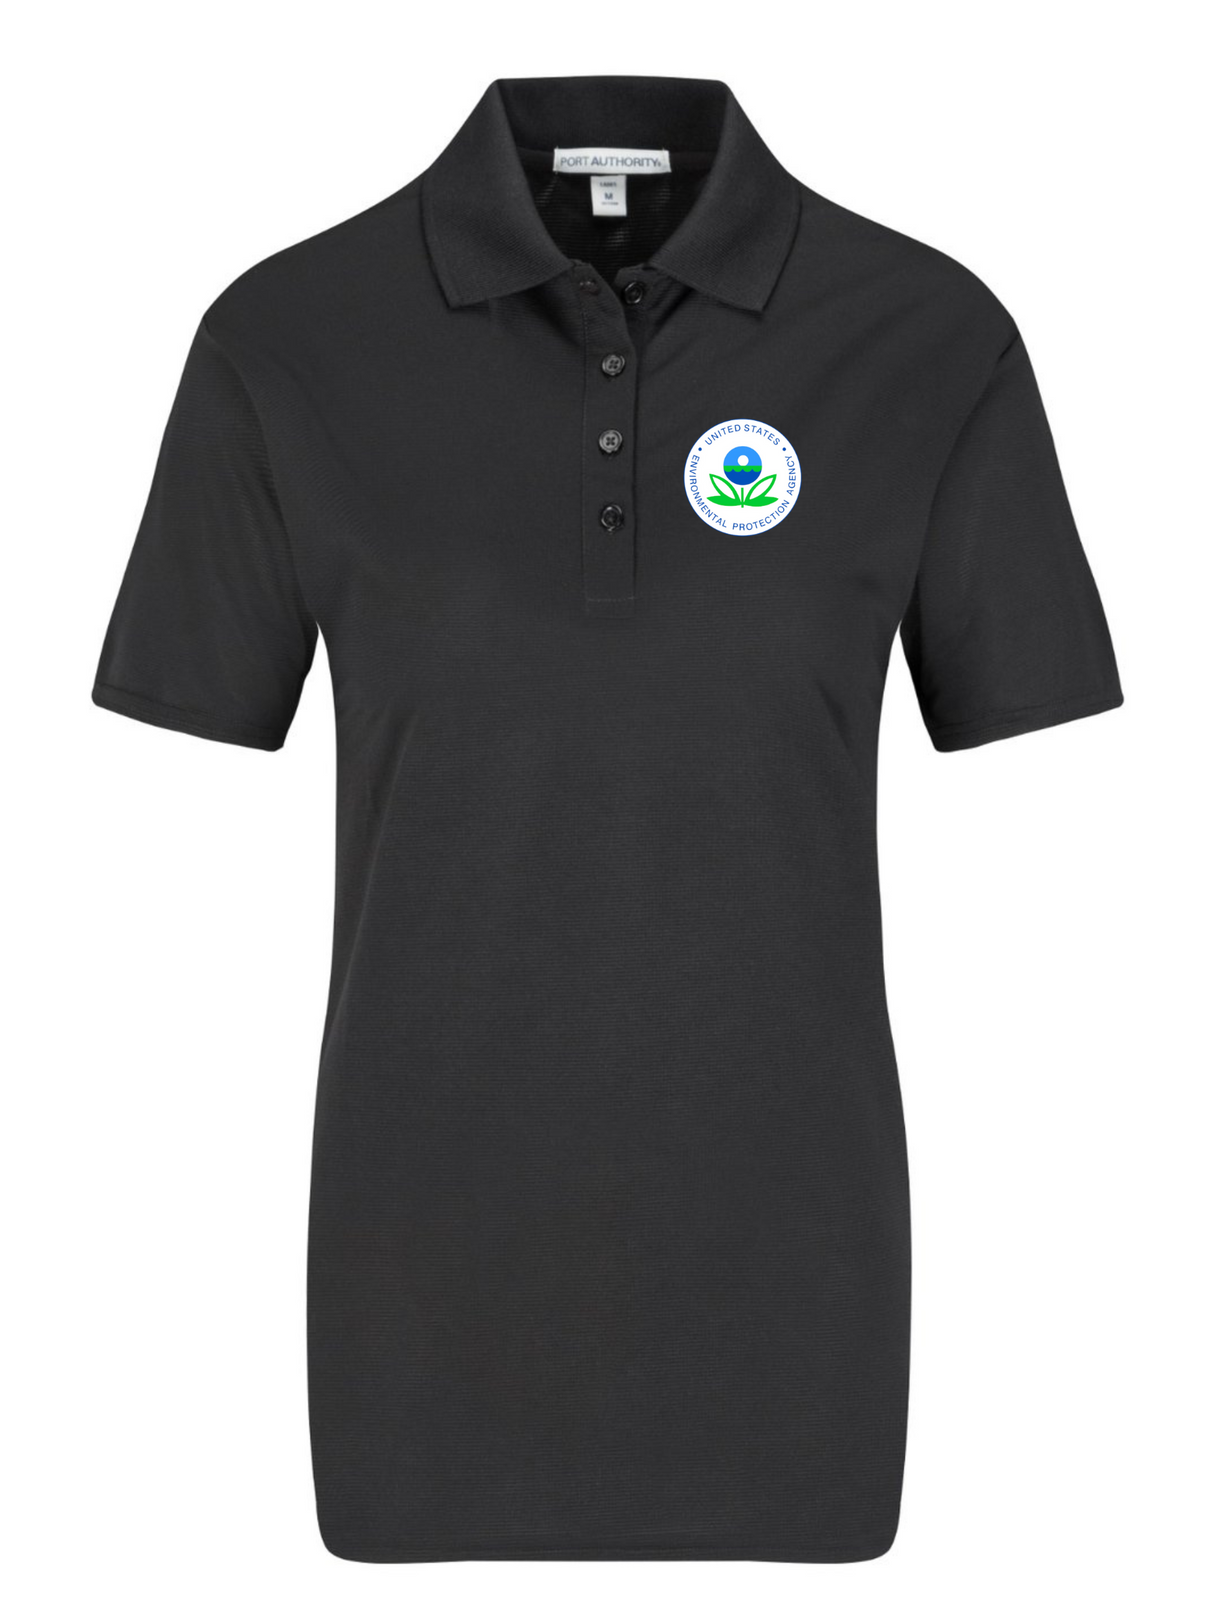 EPA Polo Shirt - Women's Short Sleeve